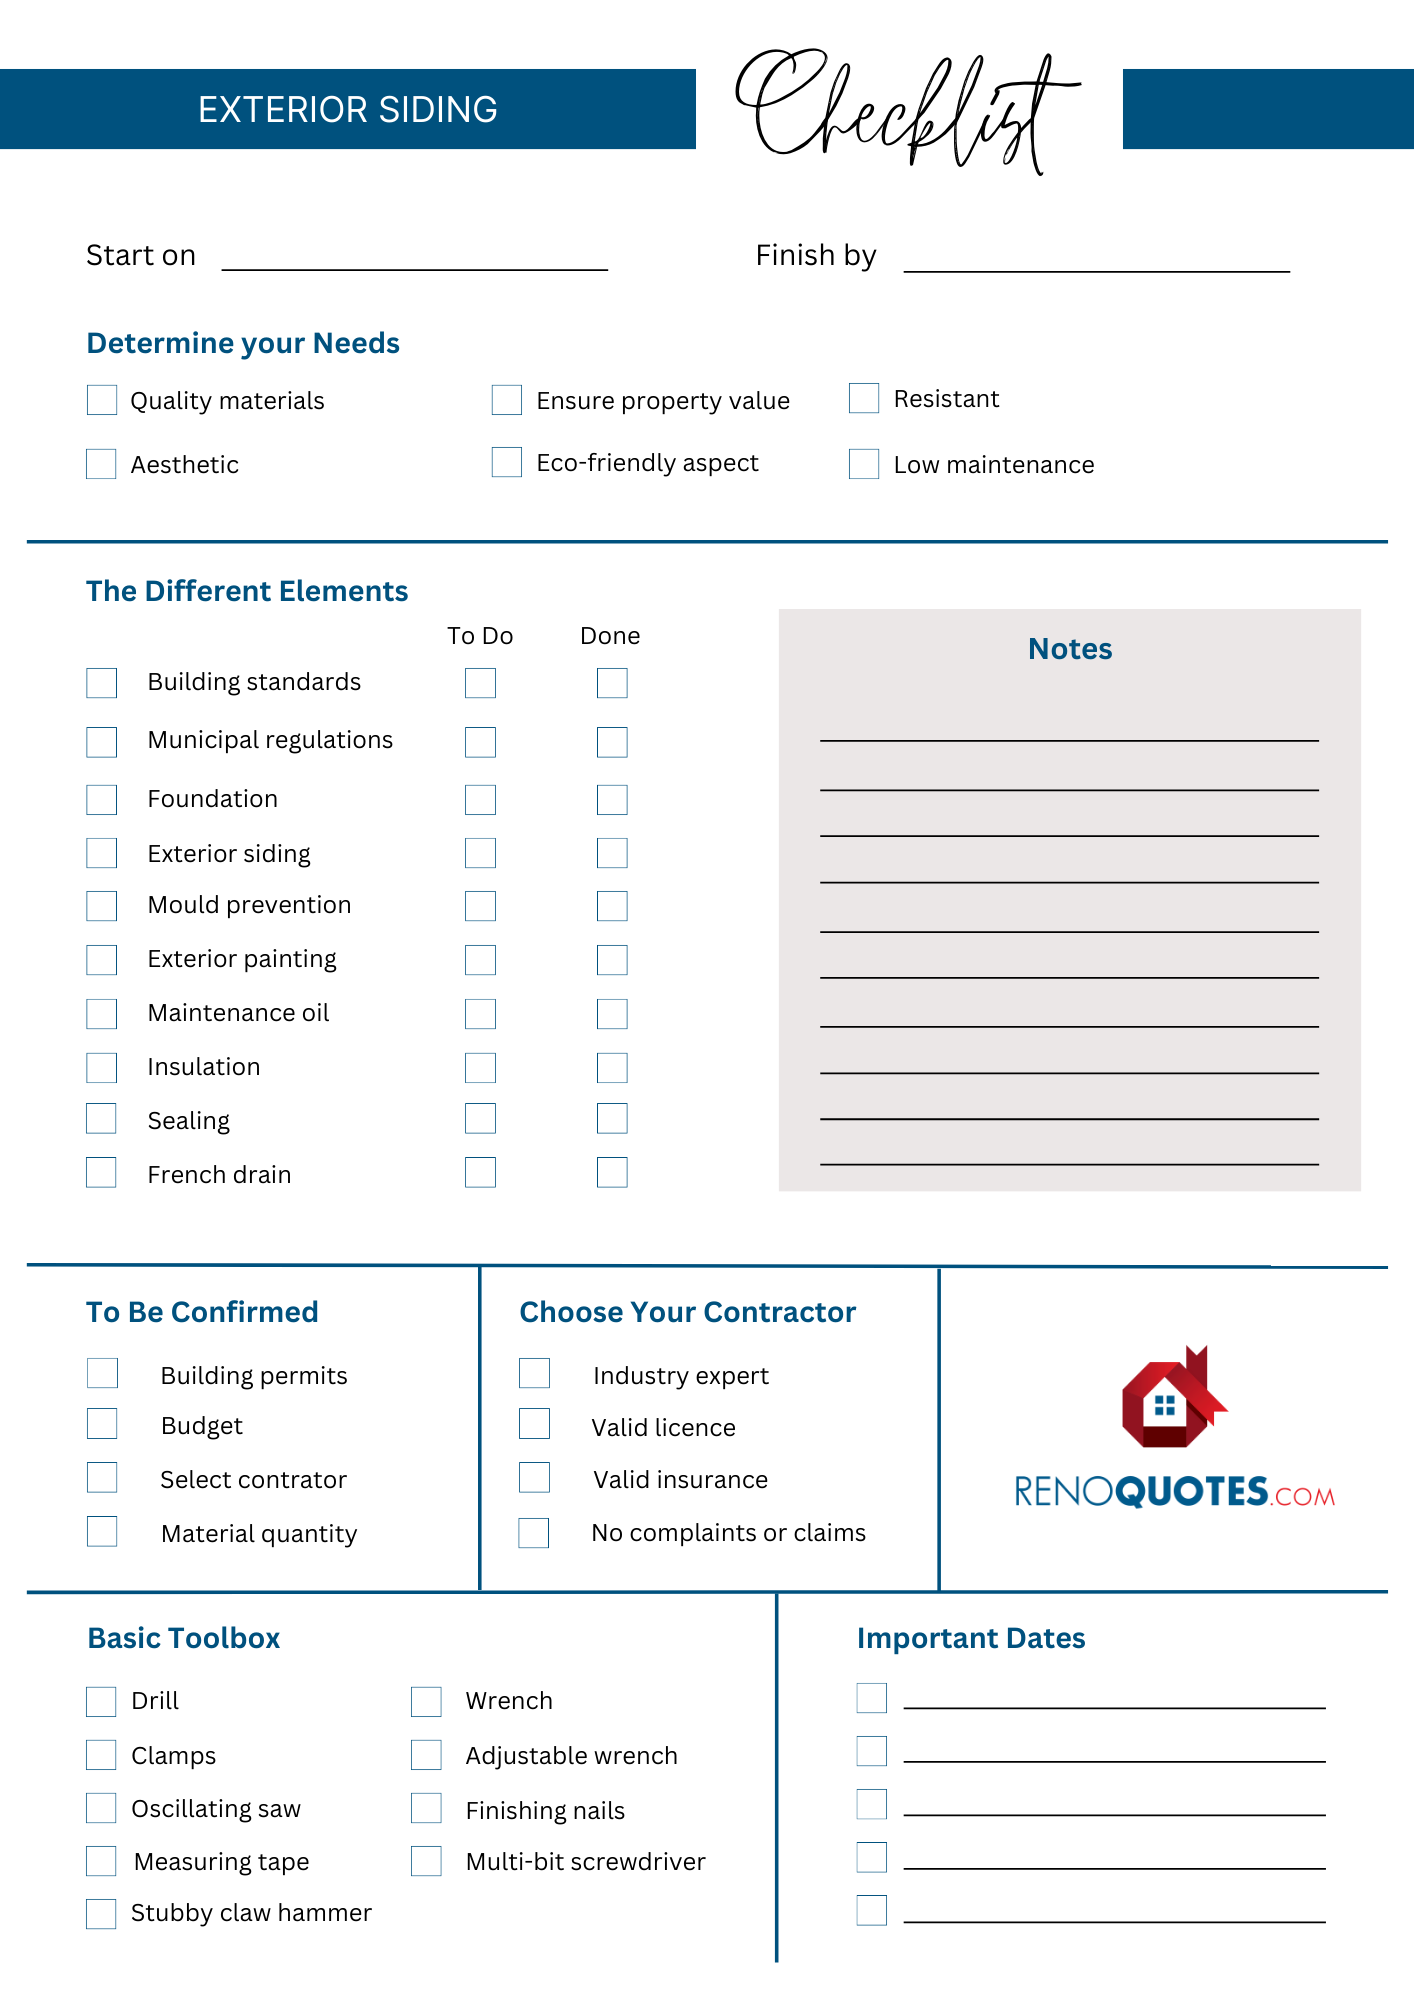 exterior siding checklist